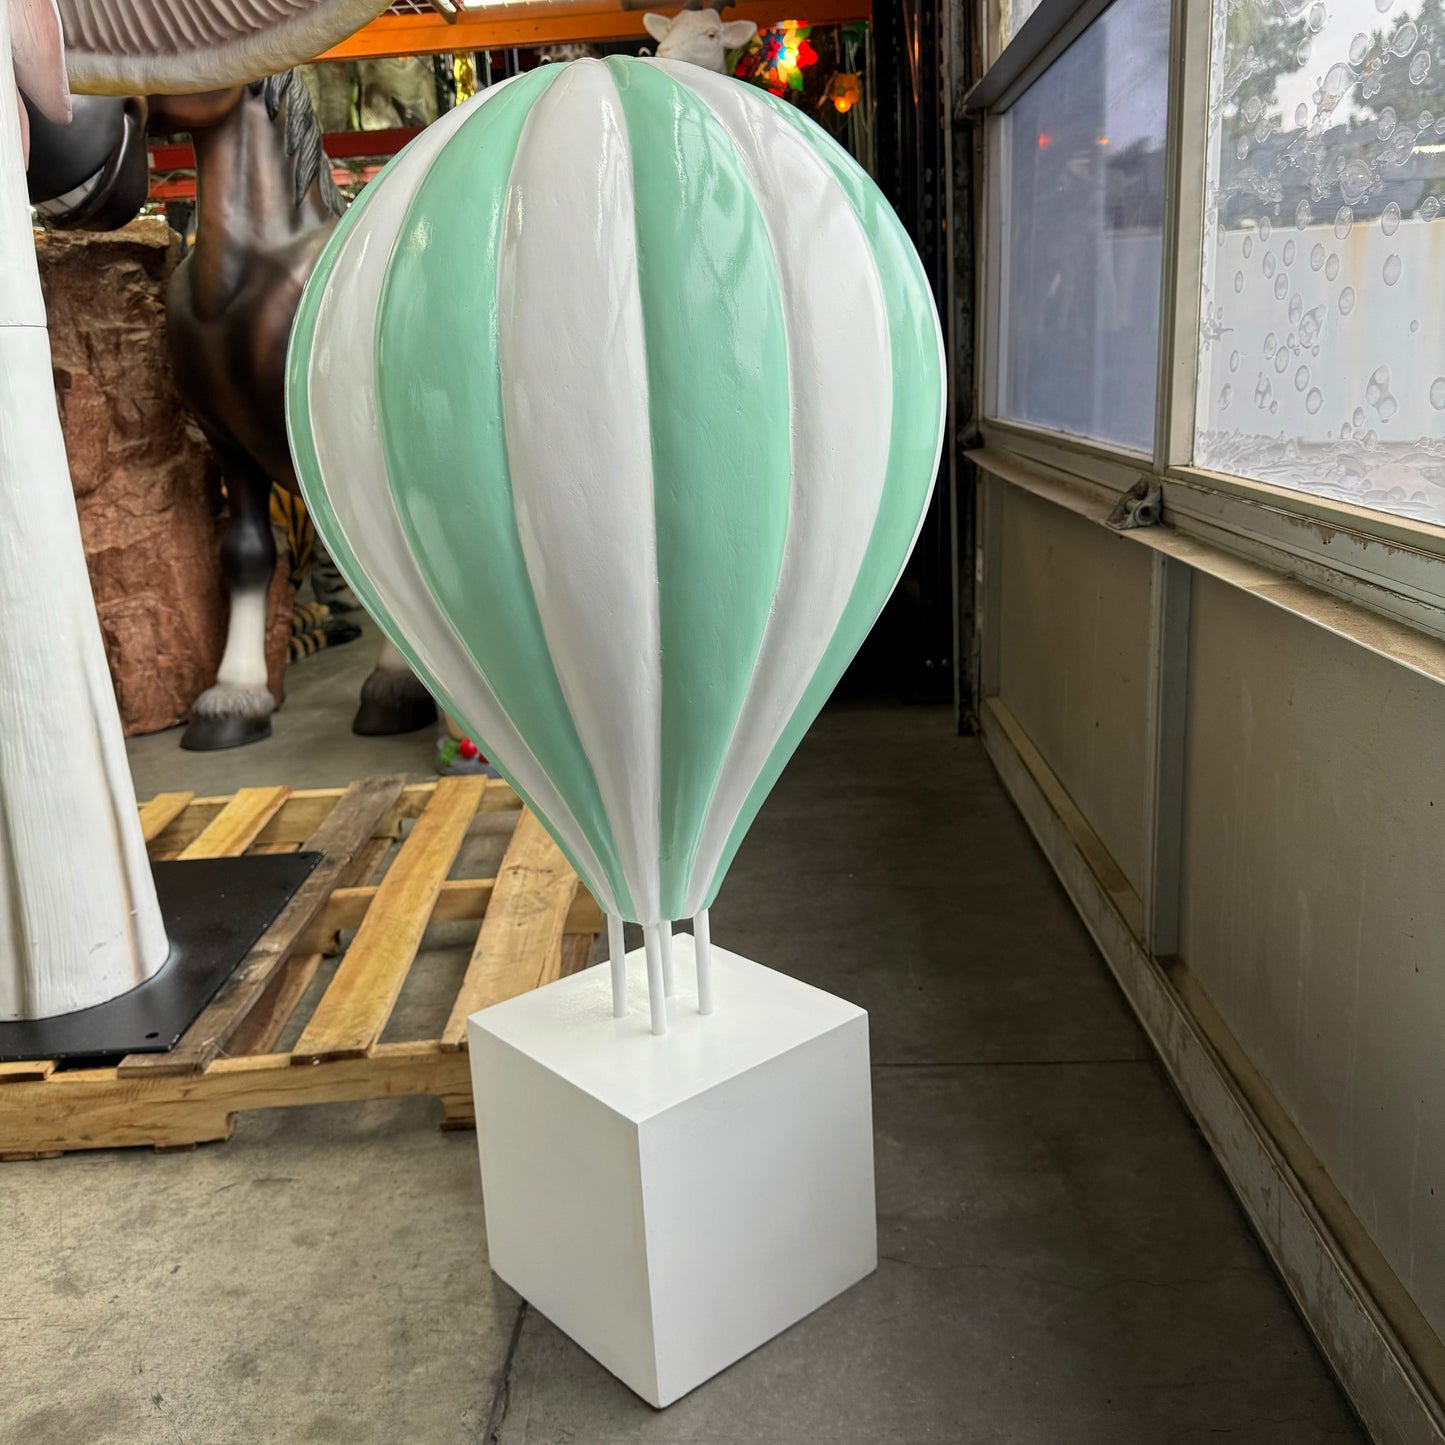 Small Green Hot Air Balloon Statue